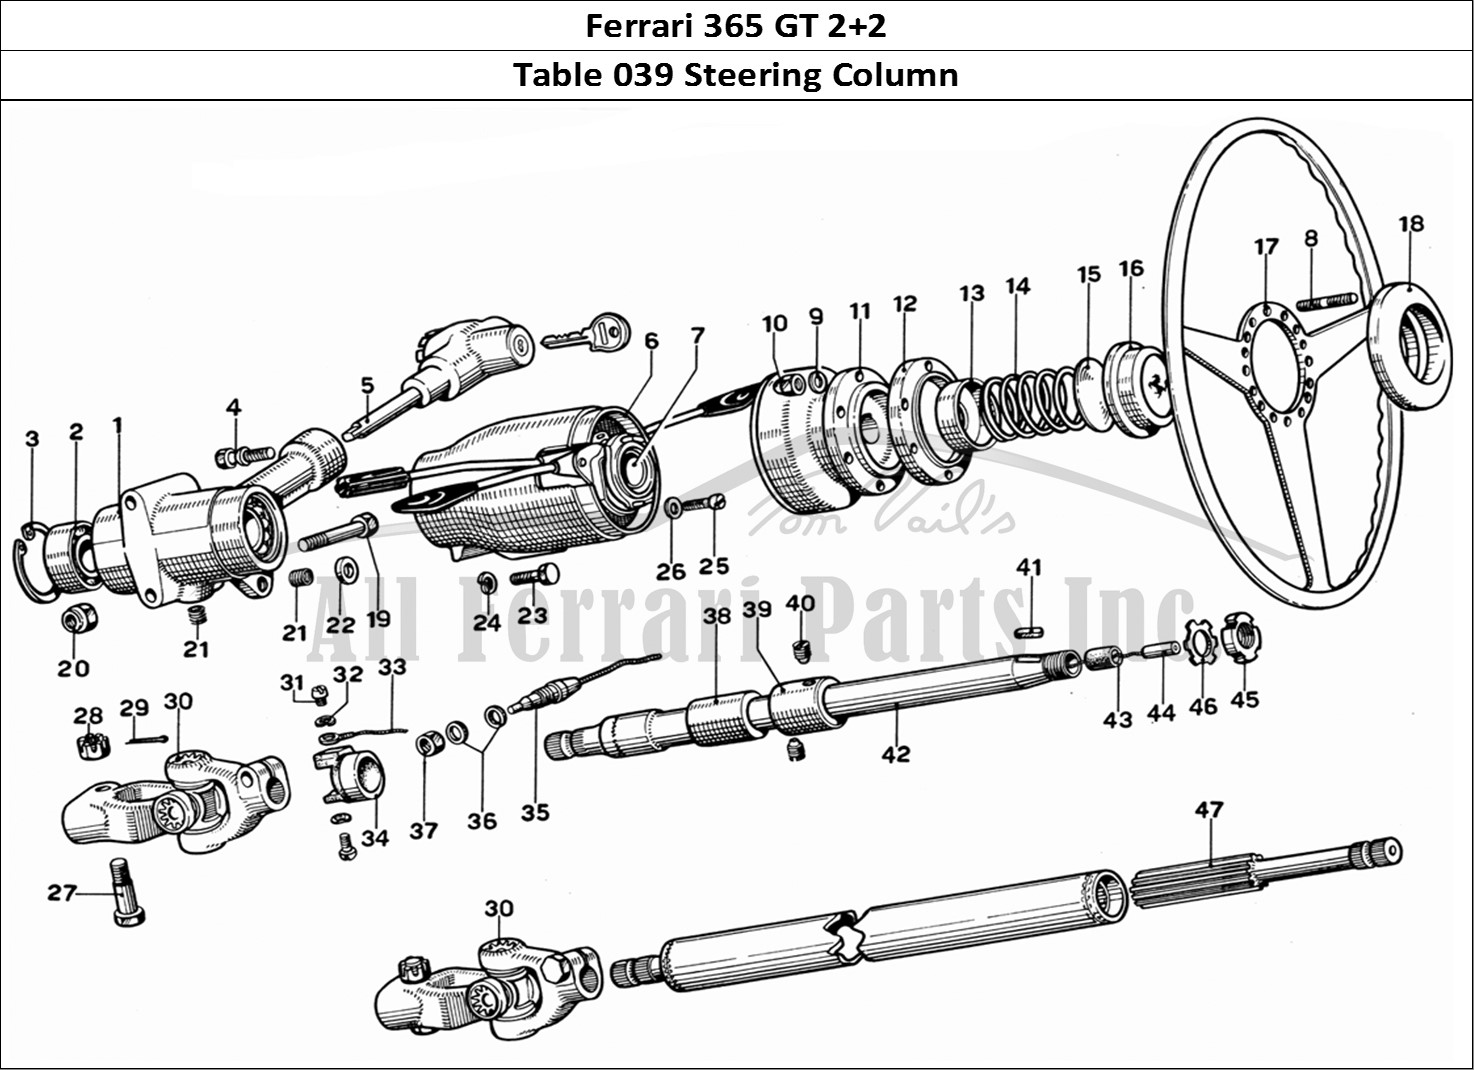 Ferrari Parts Ferrari 365 GT 2+2 (Mechanical) Page 039 Steering Column